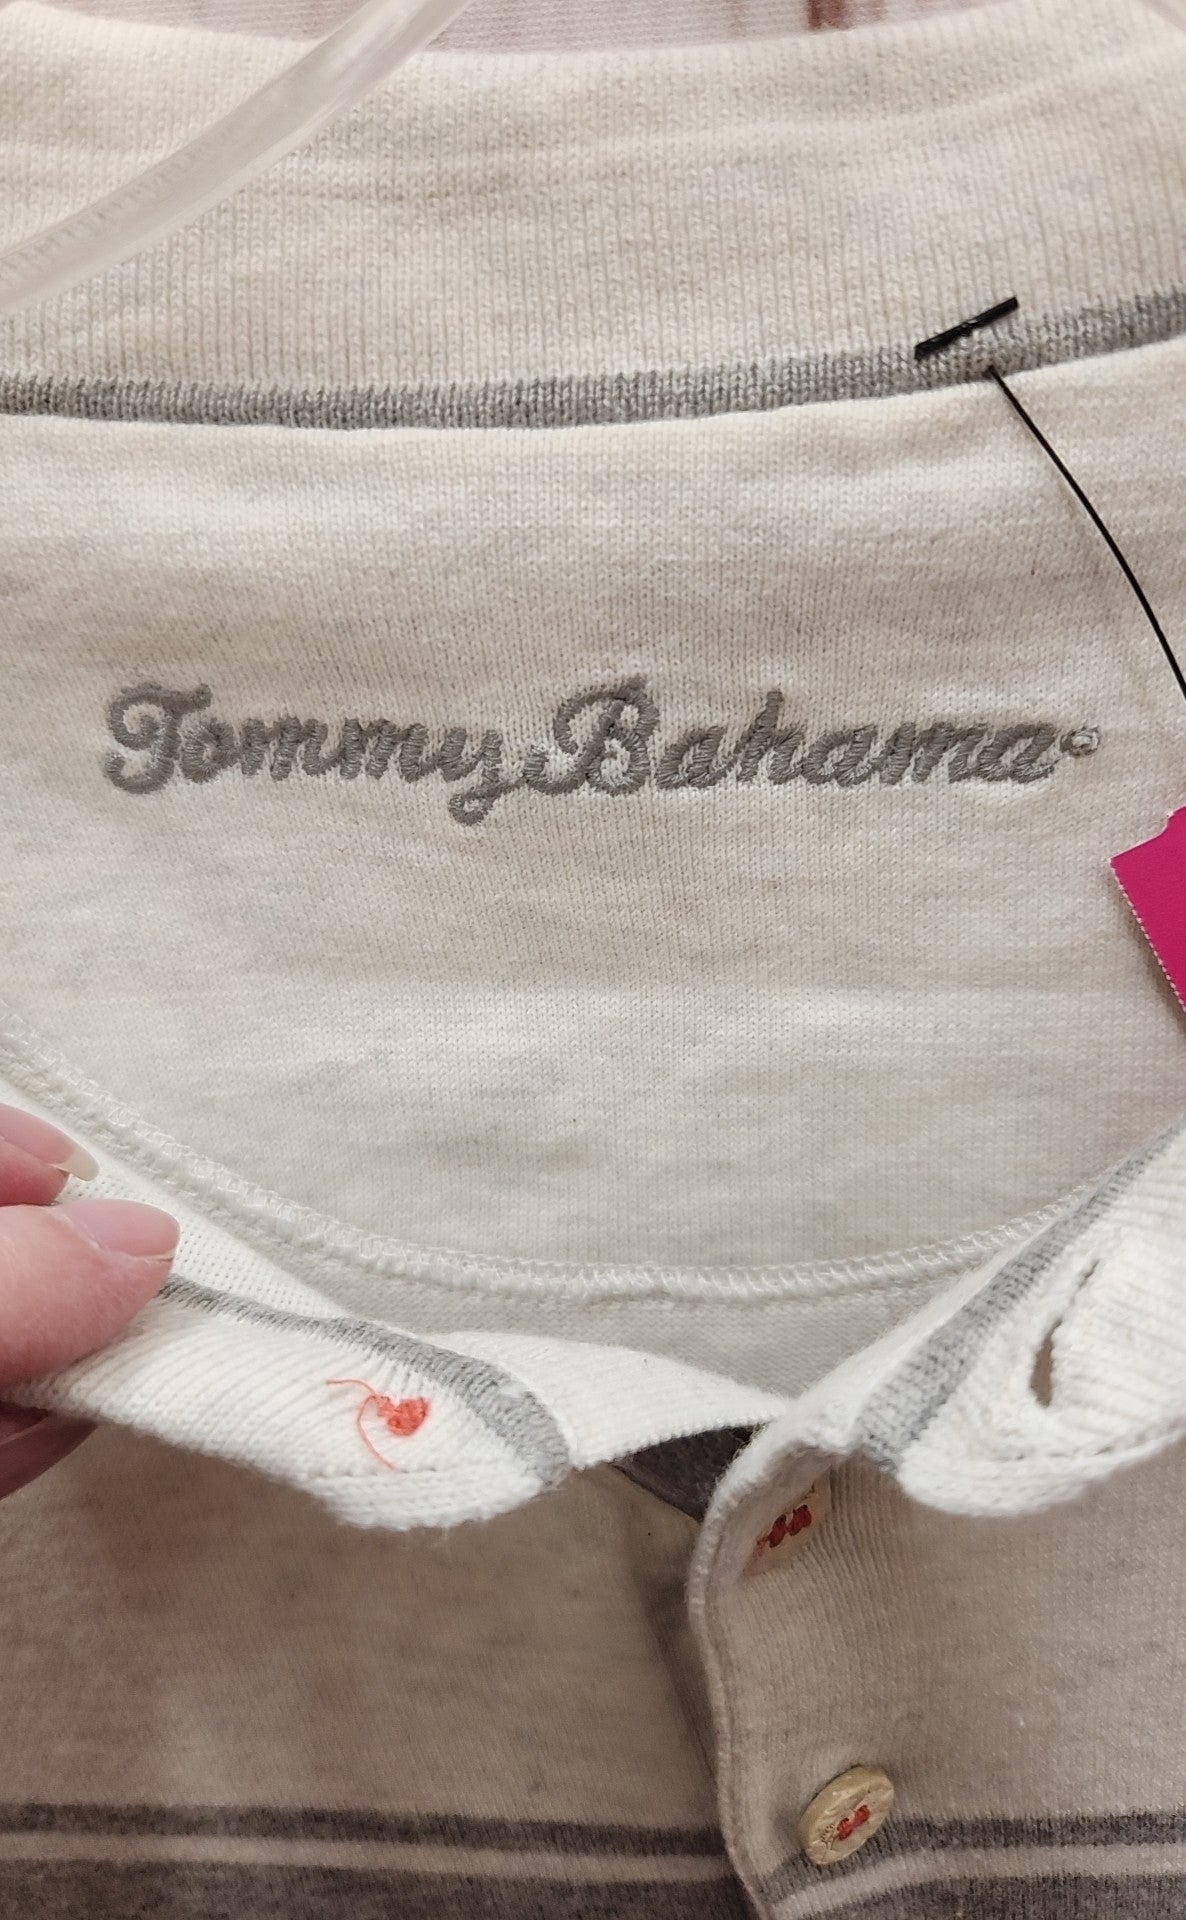 Tommy Bahama Men's Size L Navy Shirt